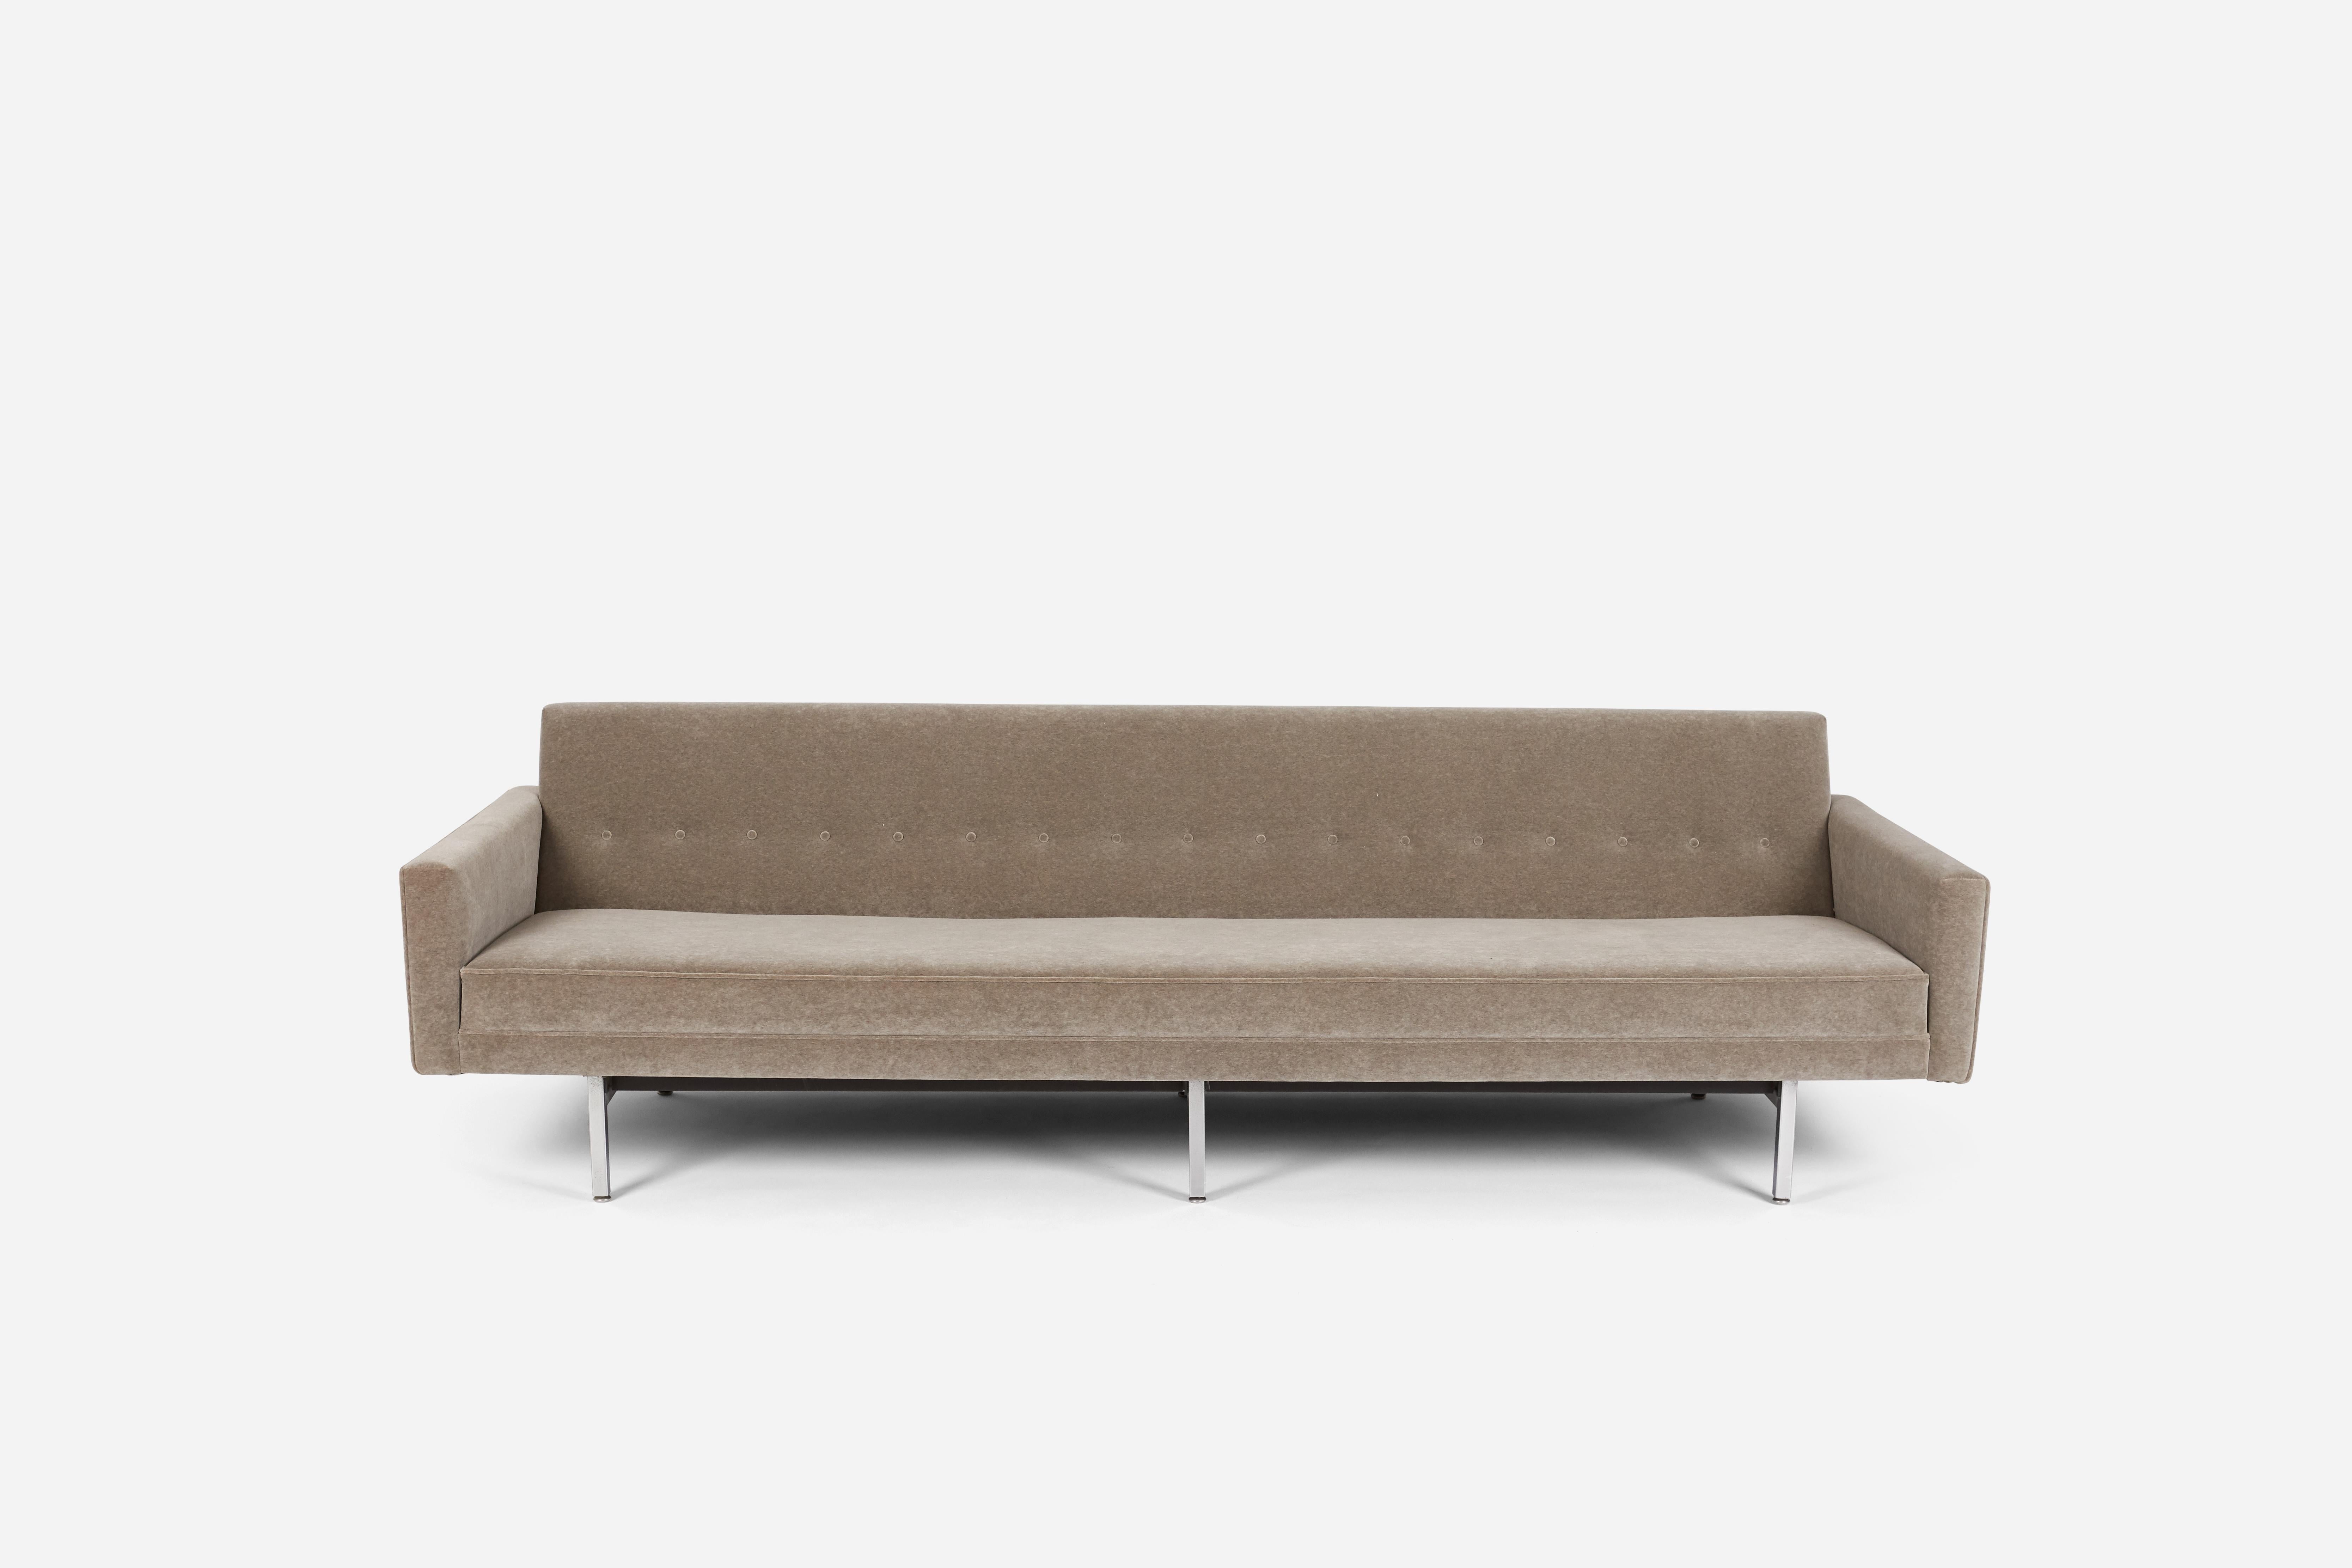 8ft sofa designed by George Nelson for Herman Miller. Model 0693, modular sofa. A Classic Nelson design. Newly upholstered in low pile velvet on brushed stainless steel frame.